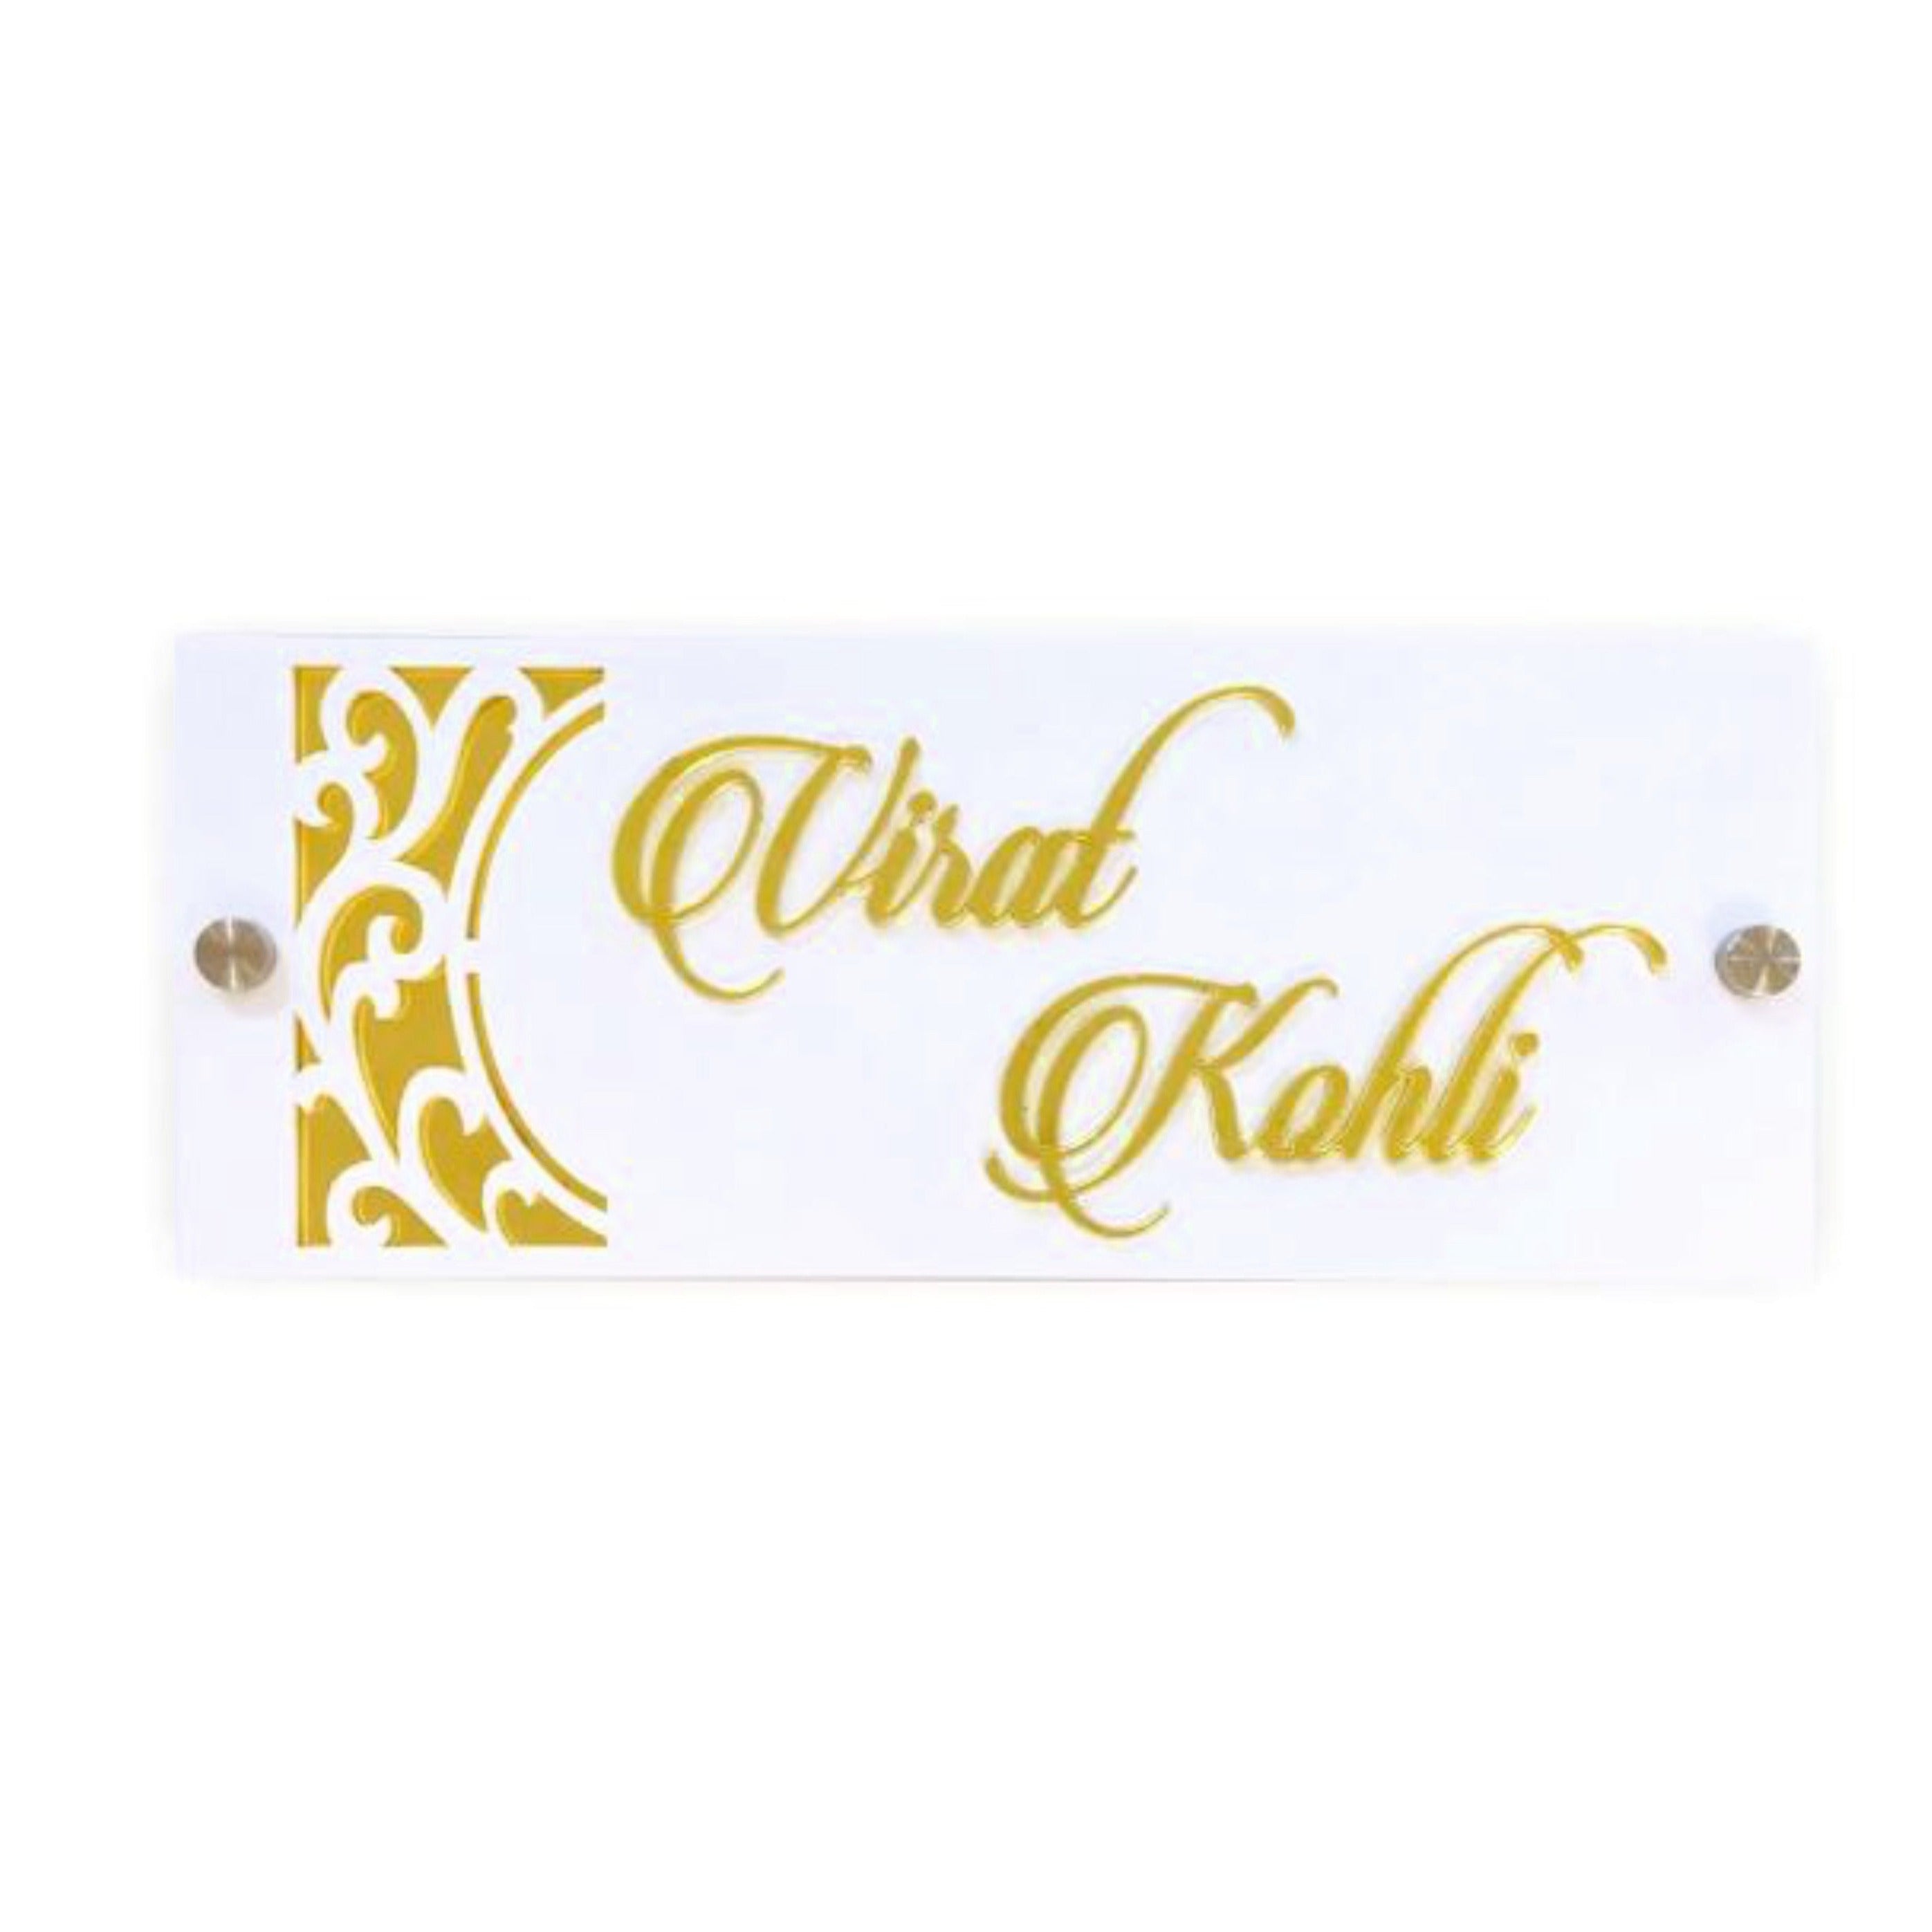 Virat Kohli - Acrylic Name Plate